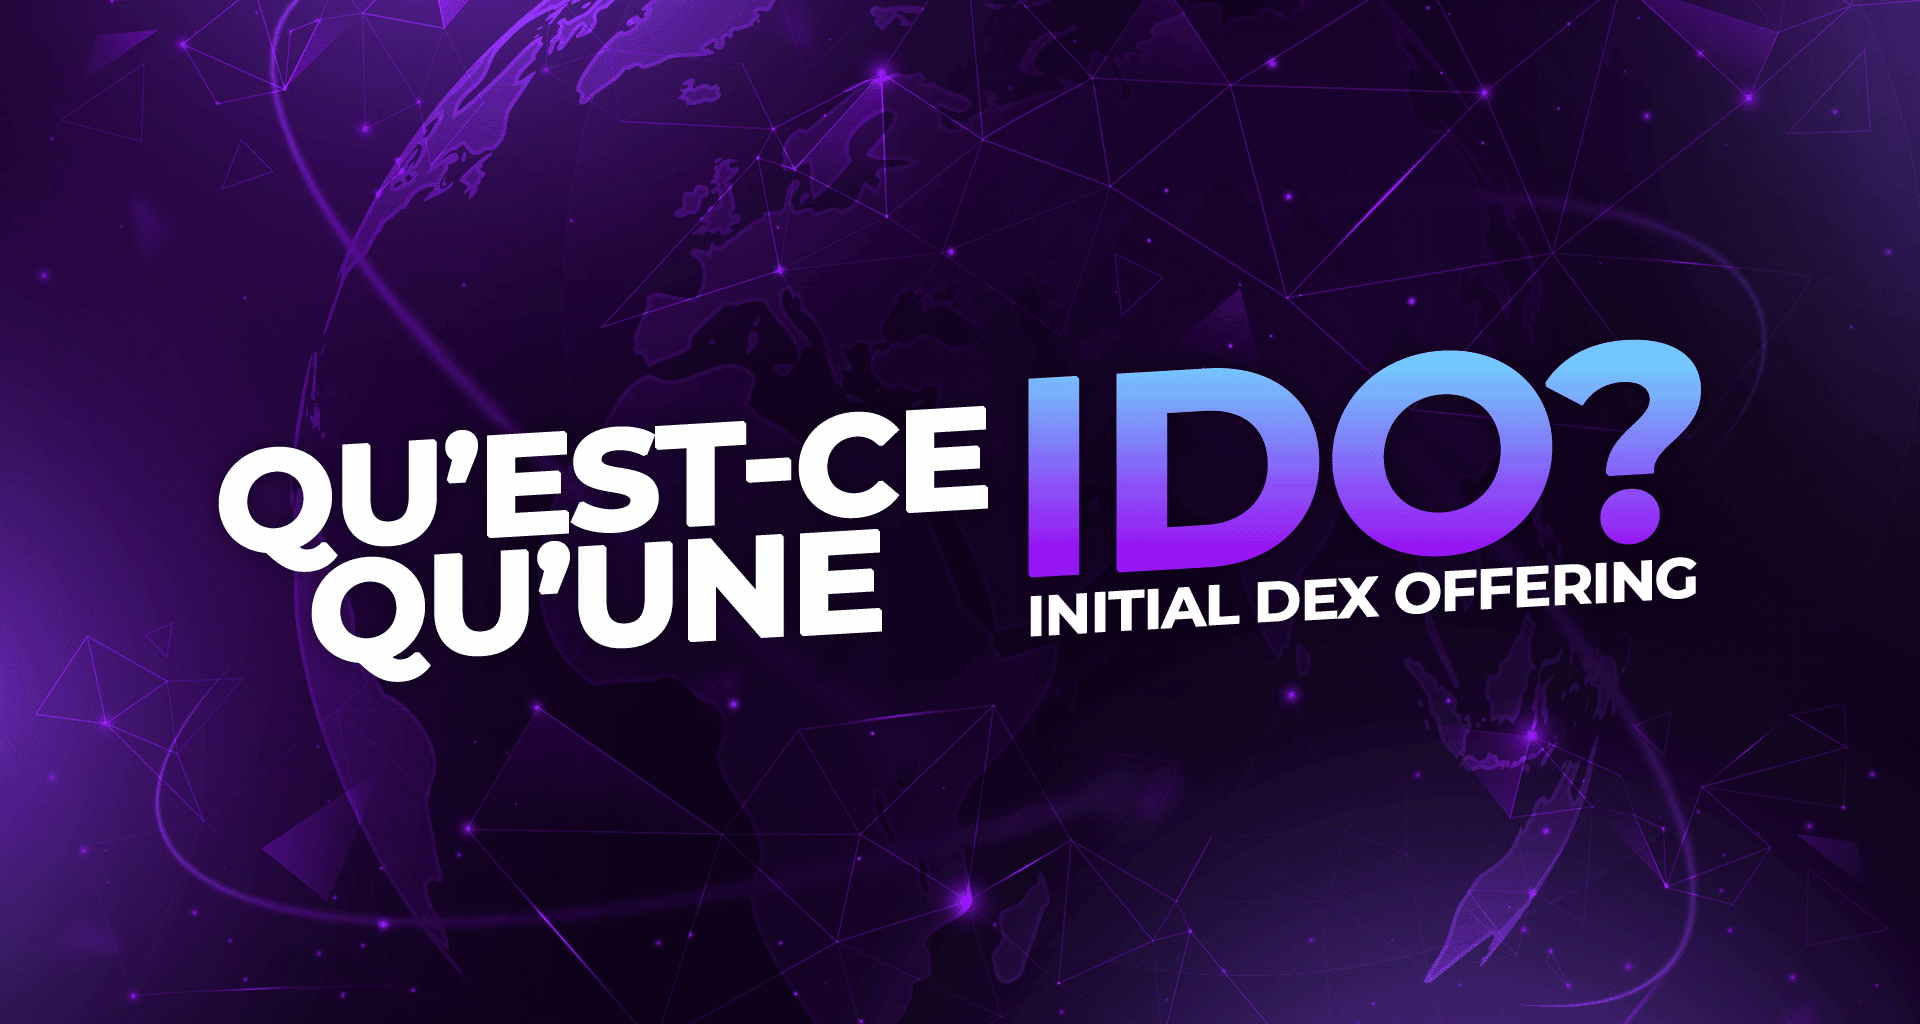 ido initial dex offering